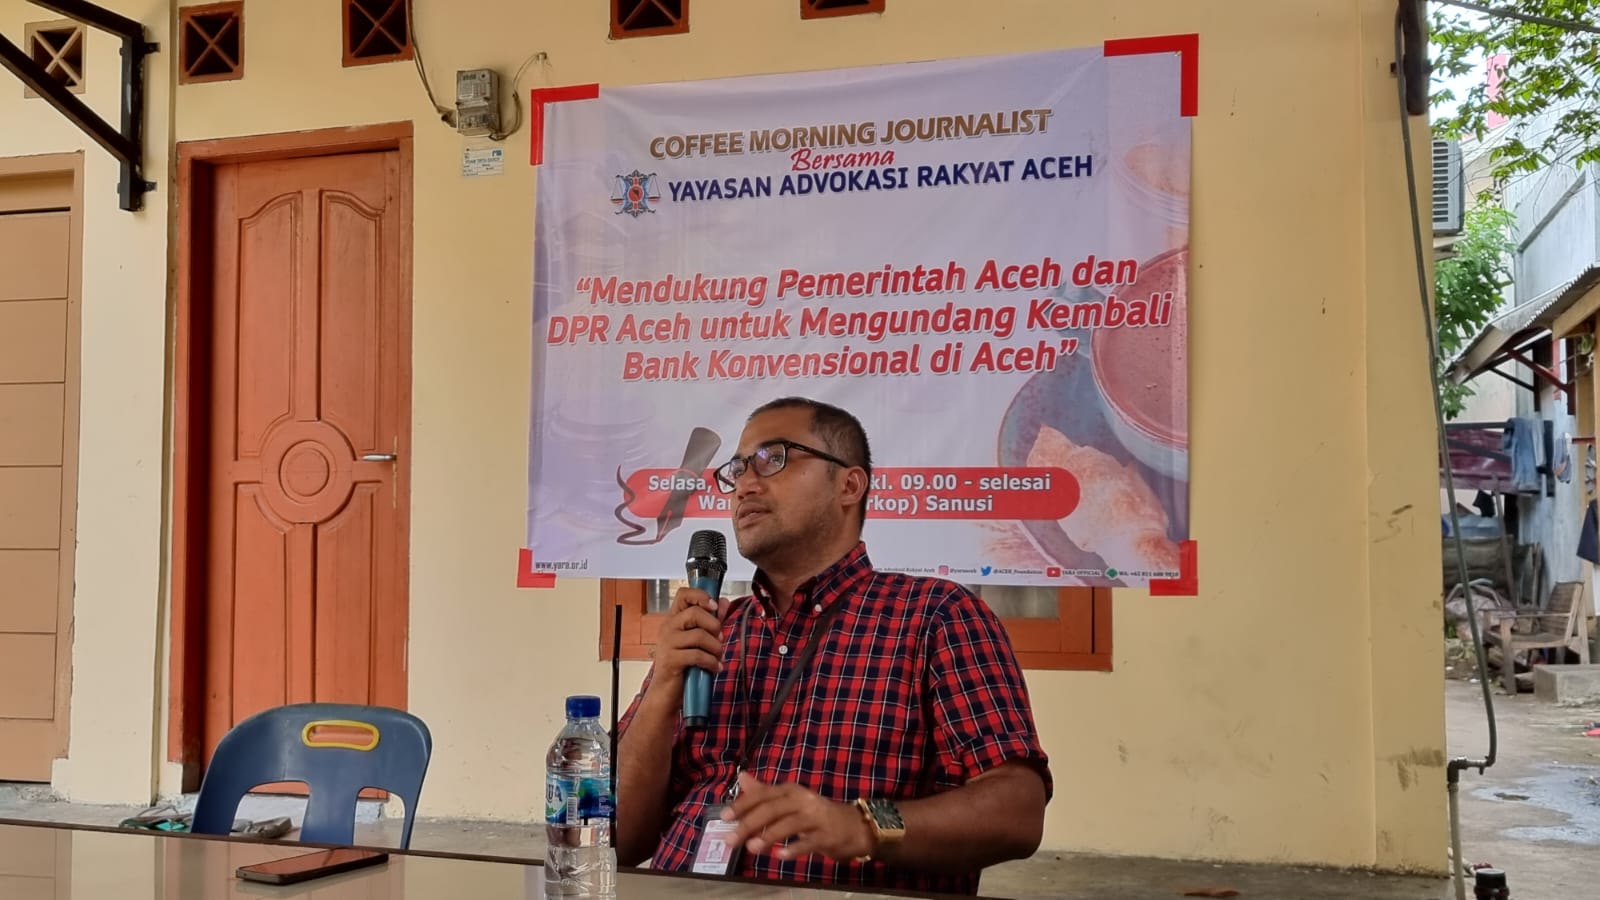 YARA Aceh: Qanun LKS Fokus Urus Lembaga Keuangan Syariah Saja, Jangan Bank Kovensional